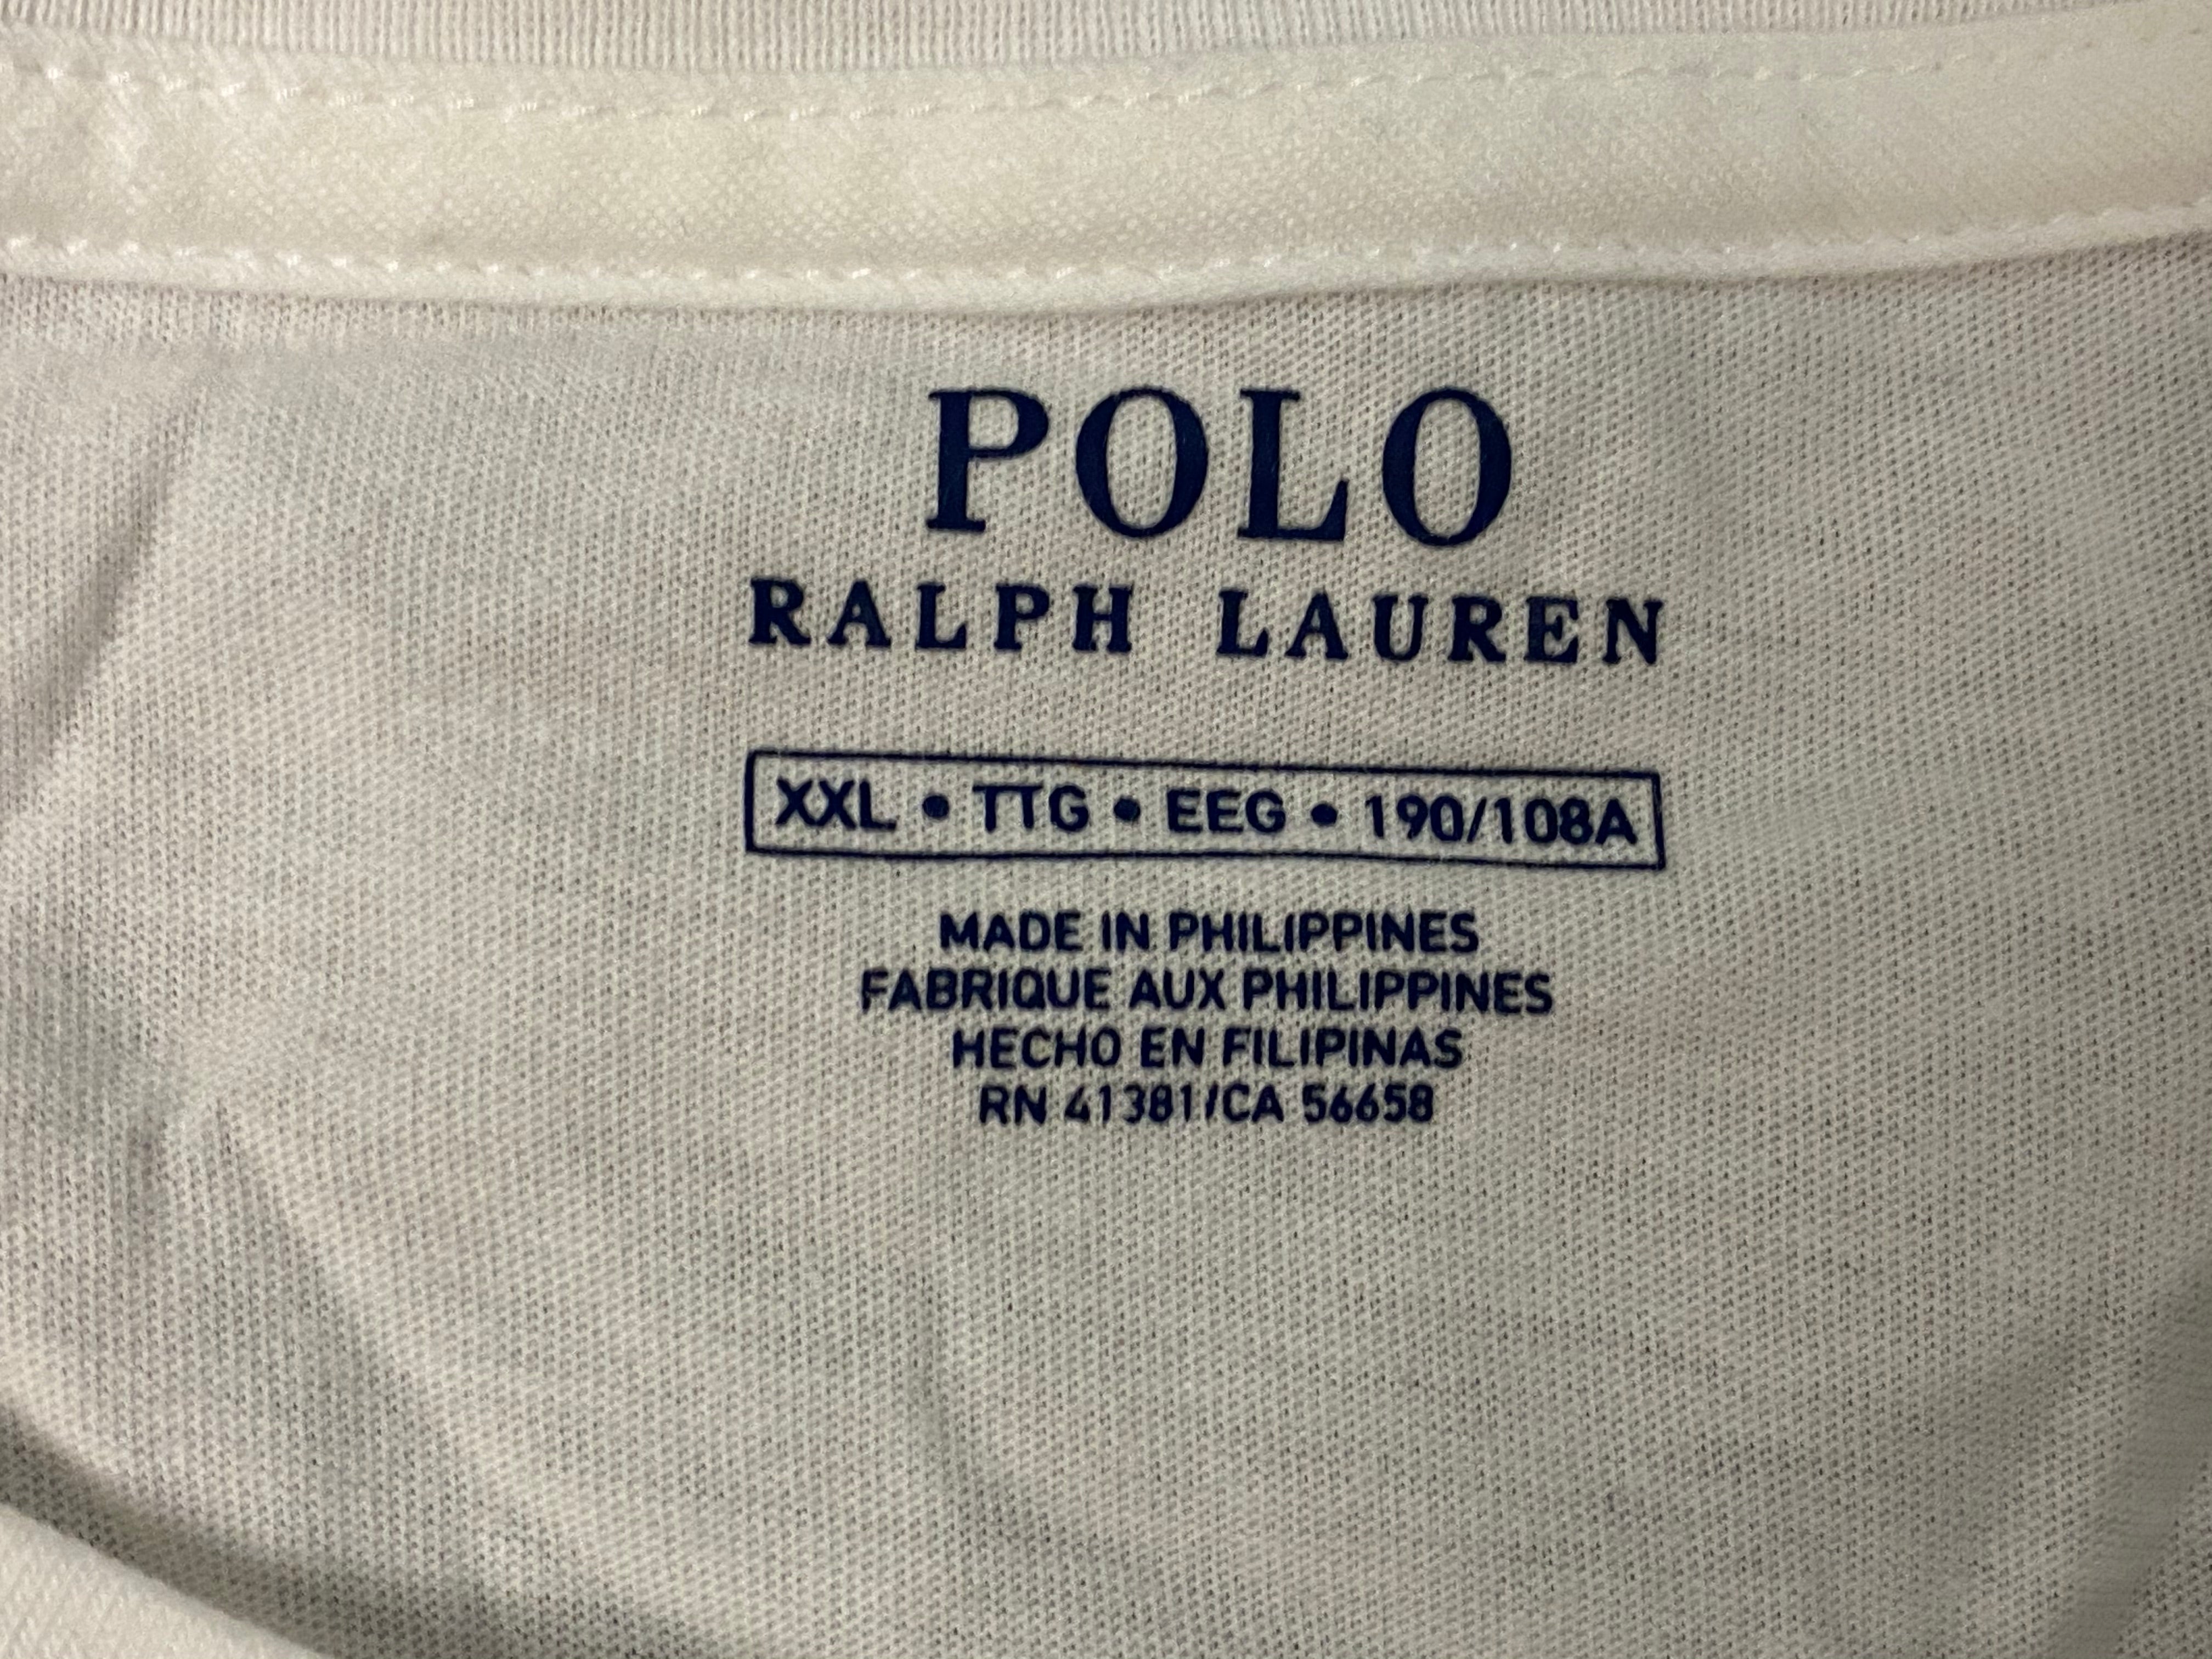 Polo ralph Lauren Zoot Suit Polo Bear - White